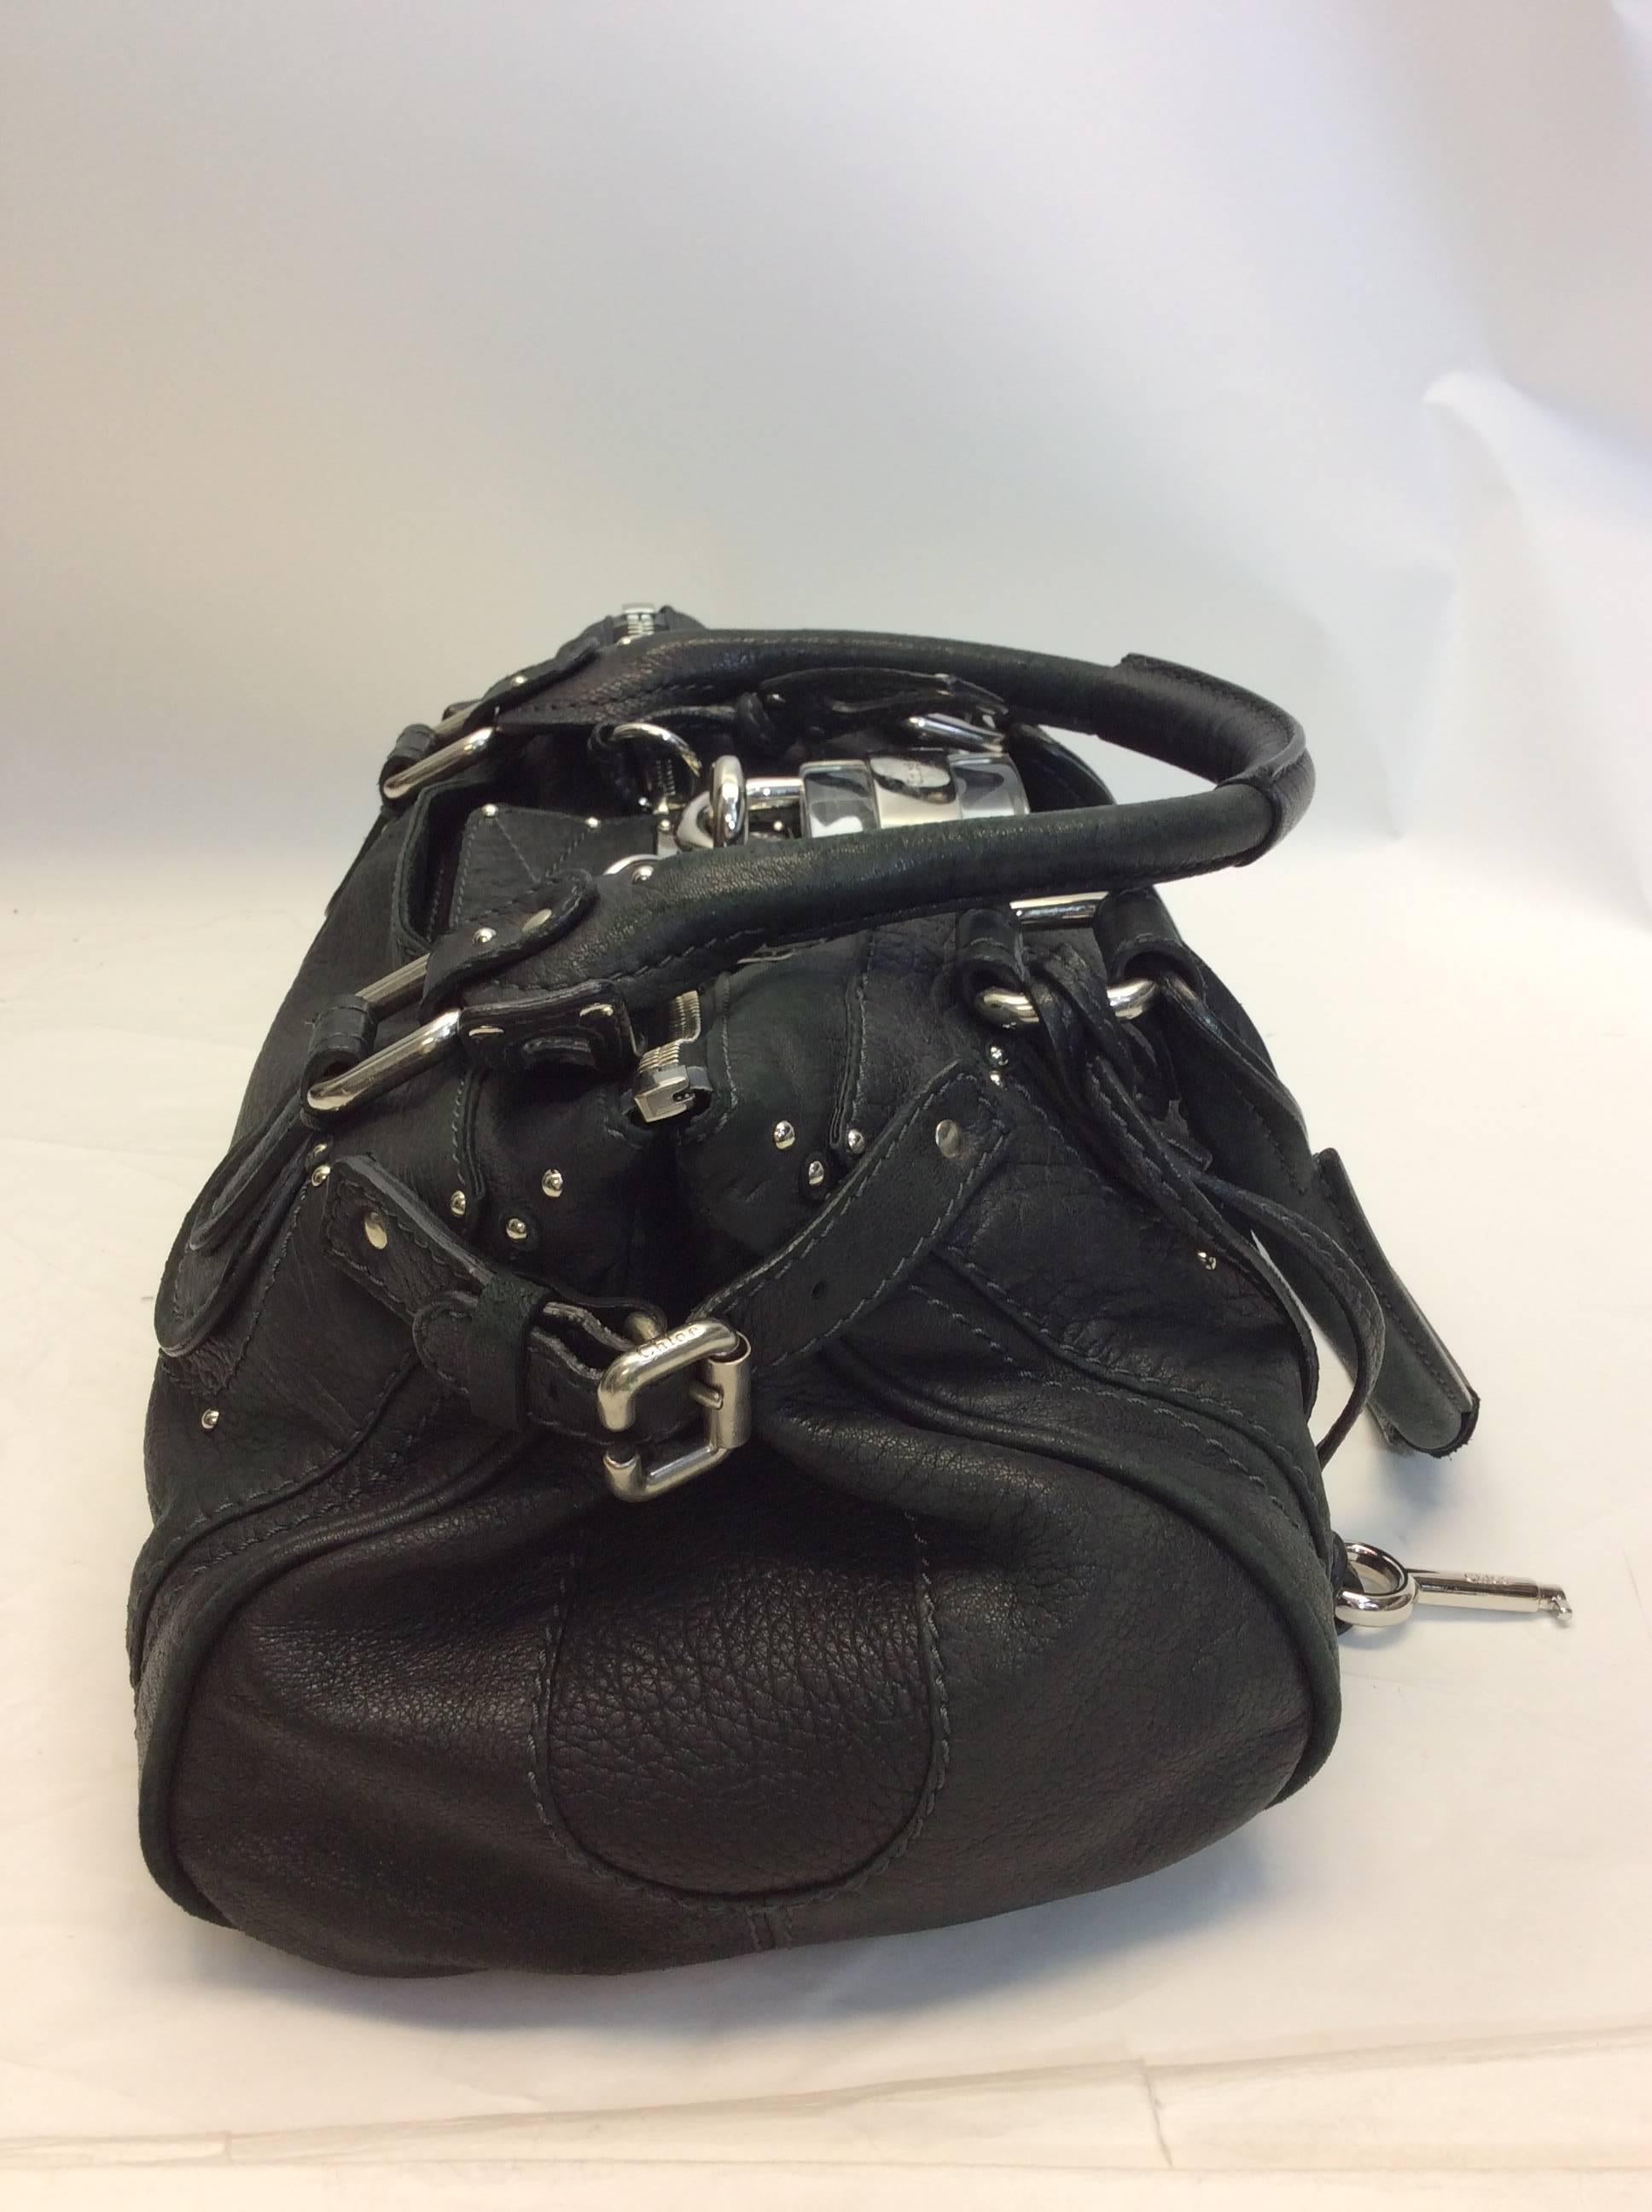 Chloe Black Leather Shoulder Bag
Signature padlock included
Silver hardware
$399
100% leather
